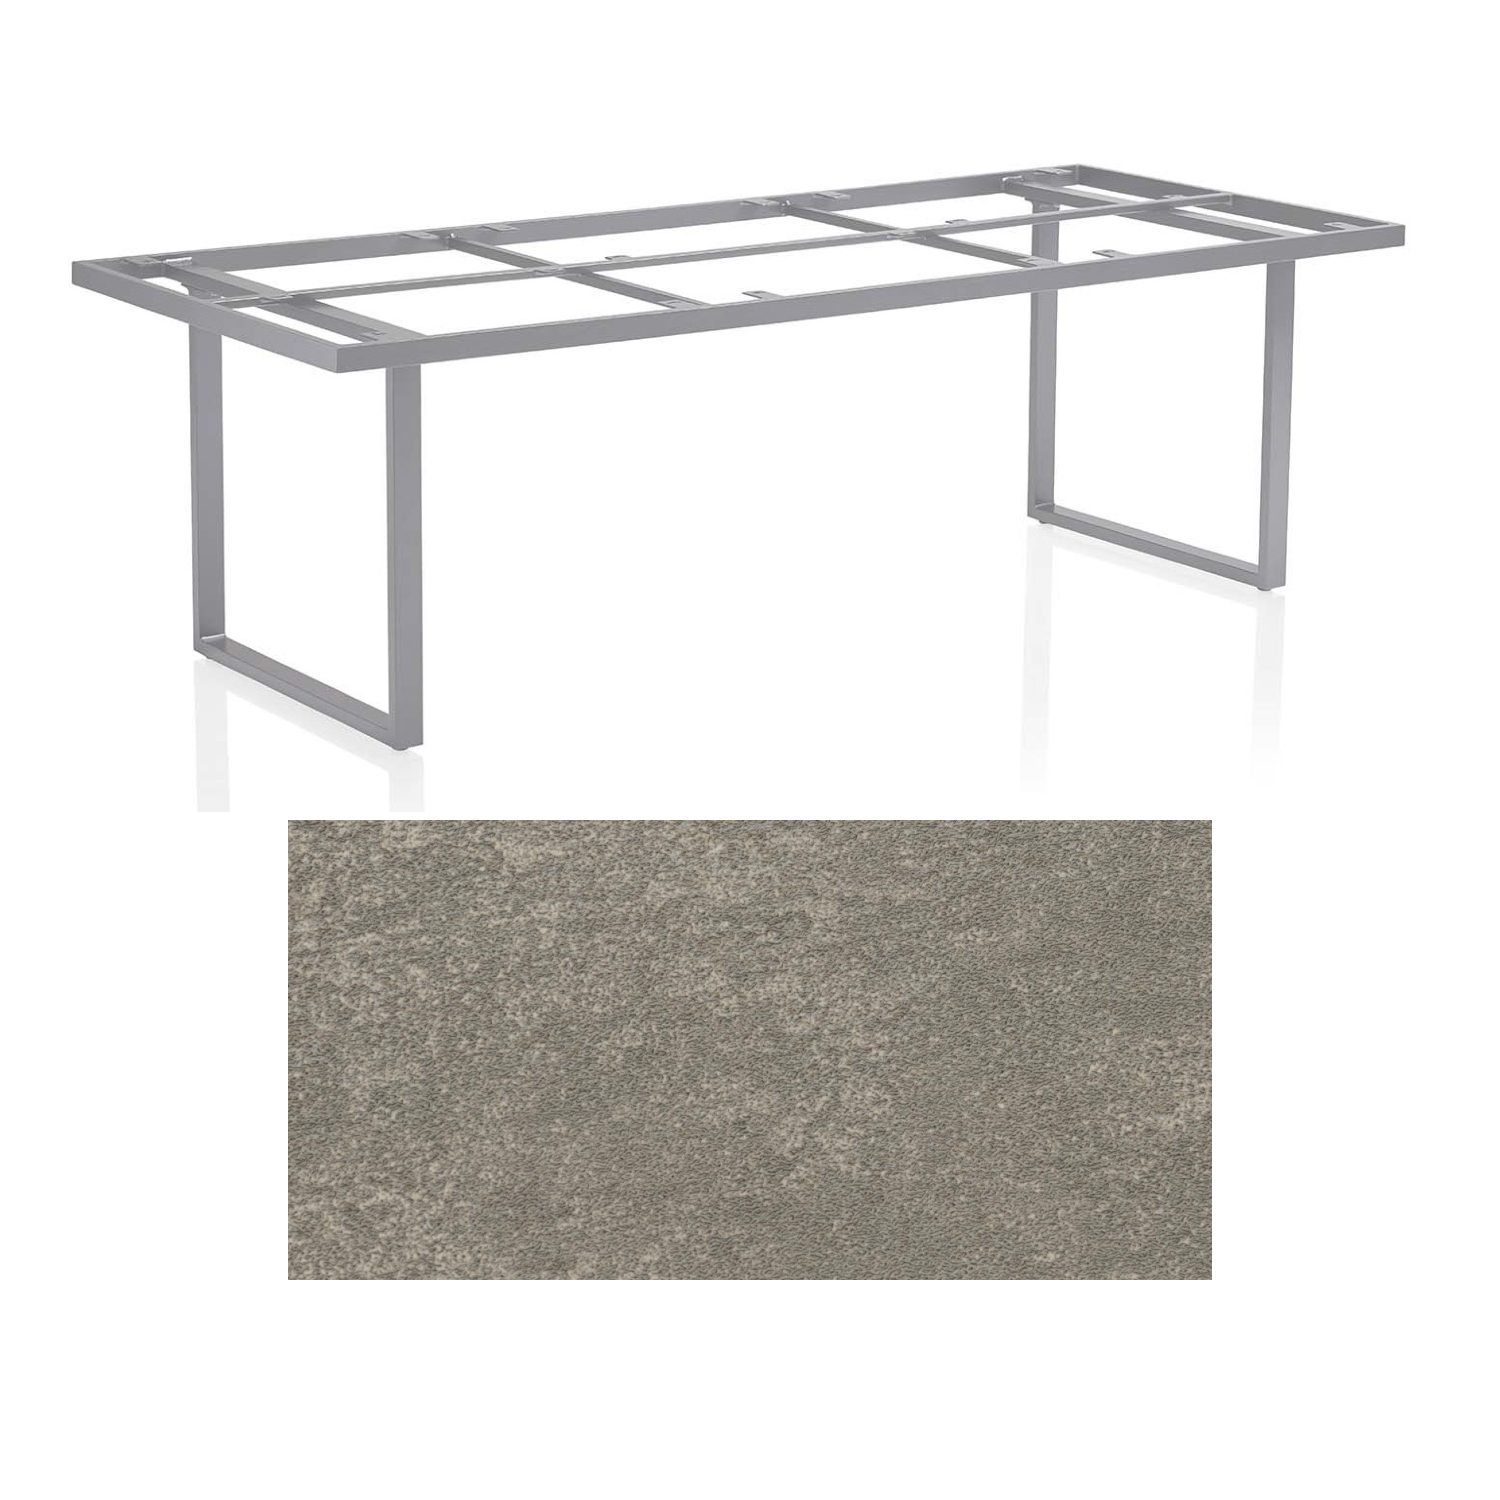 Kettler "Skate" Gartentisch Casual Dining, Gestell Aluminium silber, Tischplatte Keramik grau-taupe, 220x95 cm, Höhe ca. 68 cm